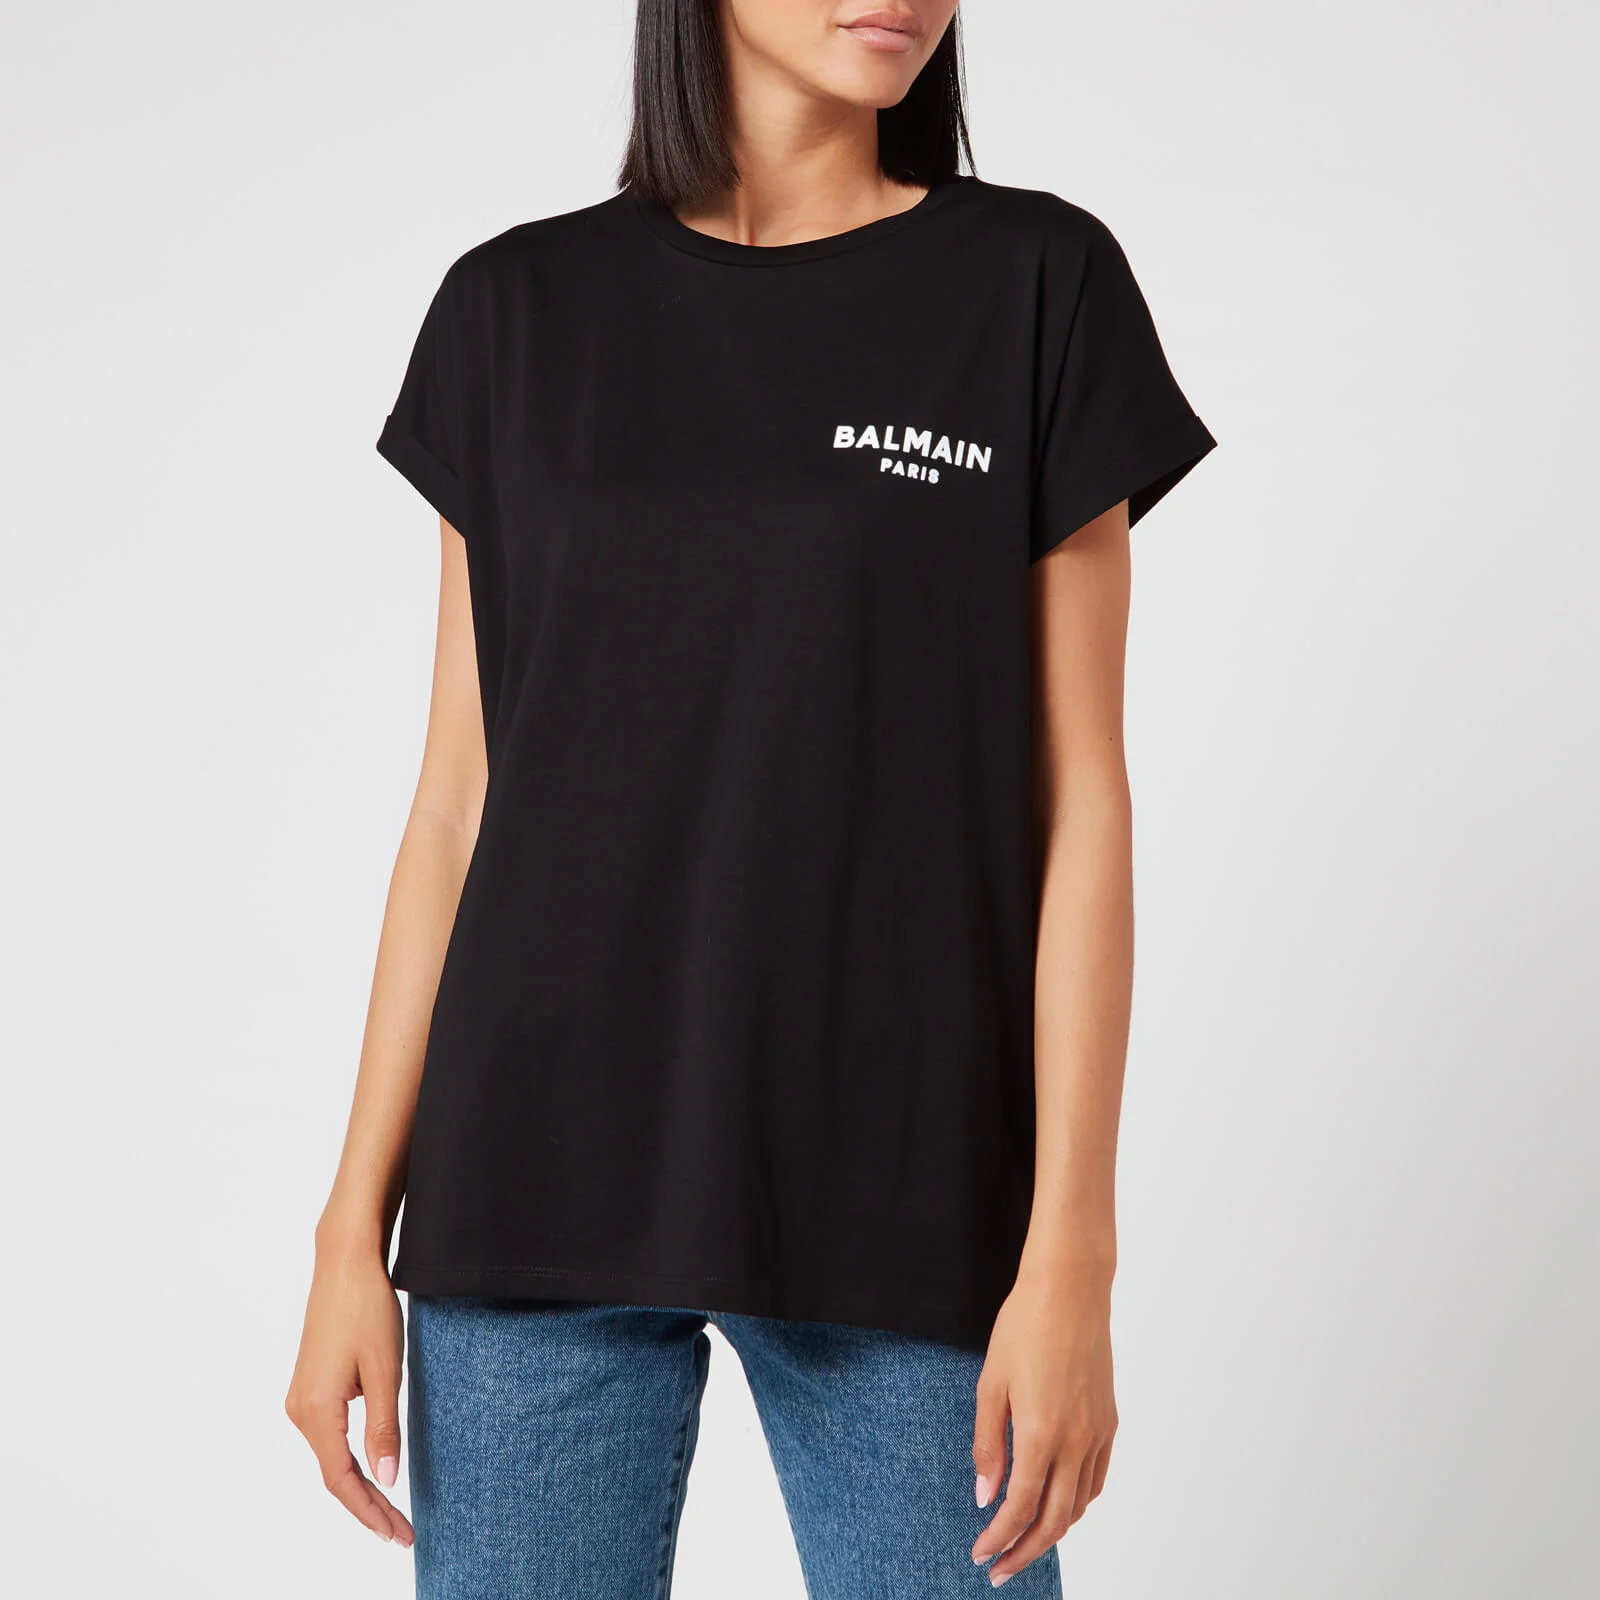 Balmain Women's Short Sleeve Flocked Logo Detail T-Shirt - Black Image 1